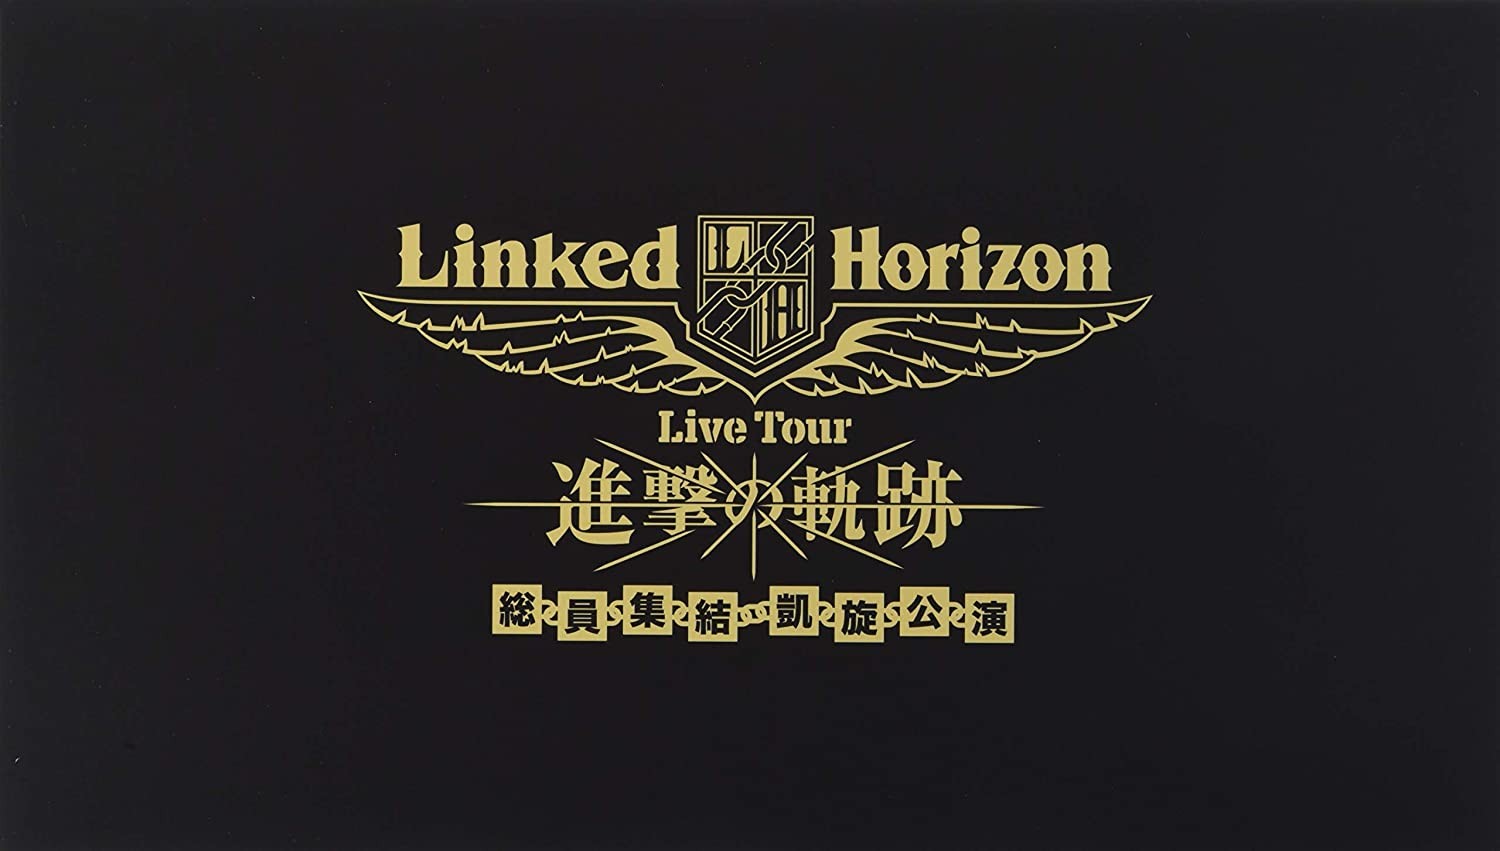 [Blu-ray] Linked Horizon Live Tour 『進撃の軌跡』 総員集結 凱旋公演 (2018.12.26/ISO/90.47GB)